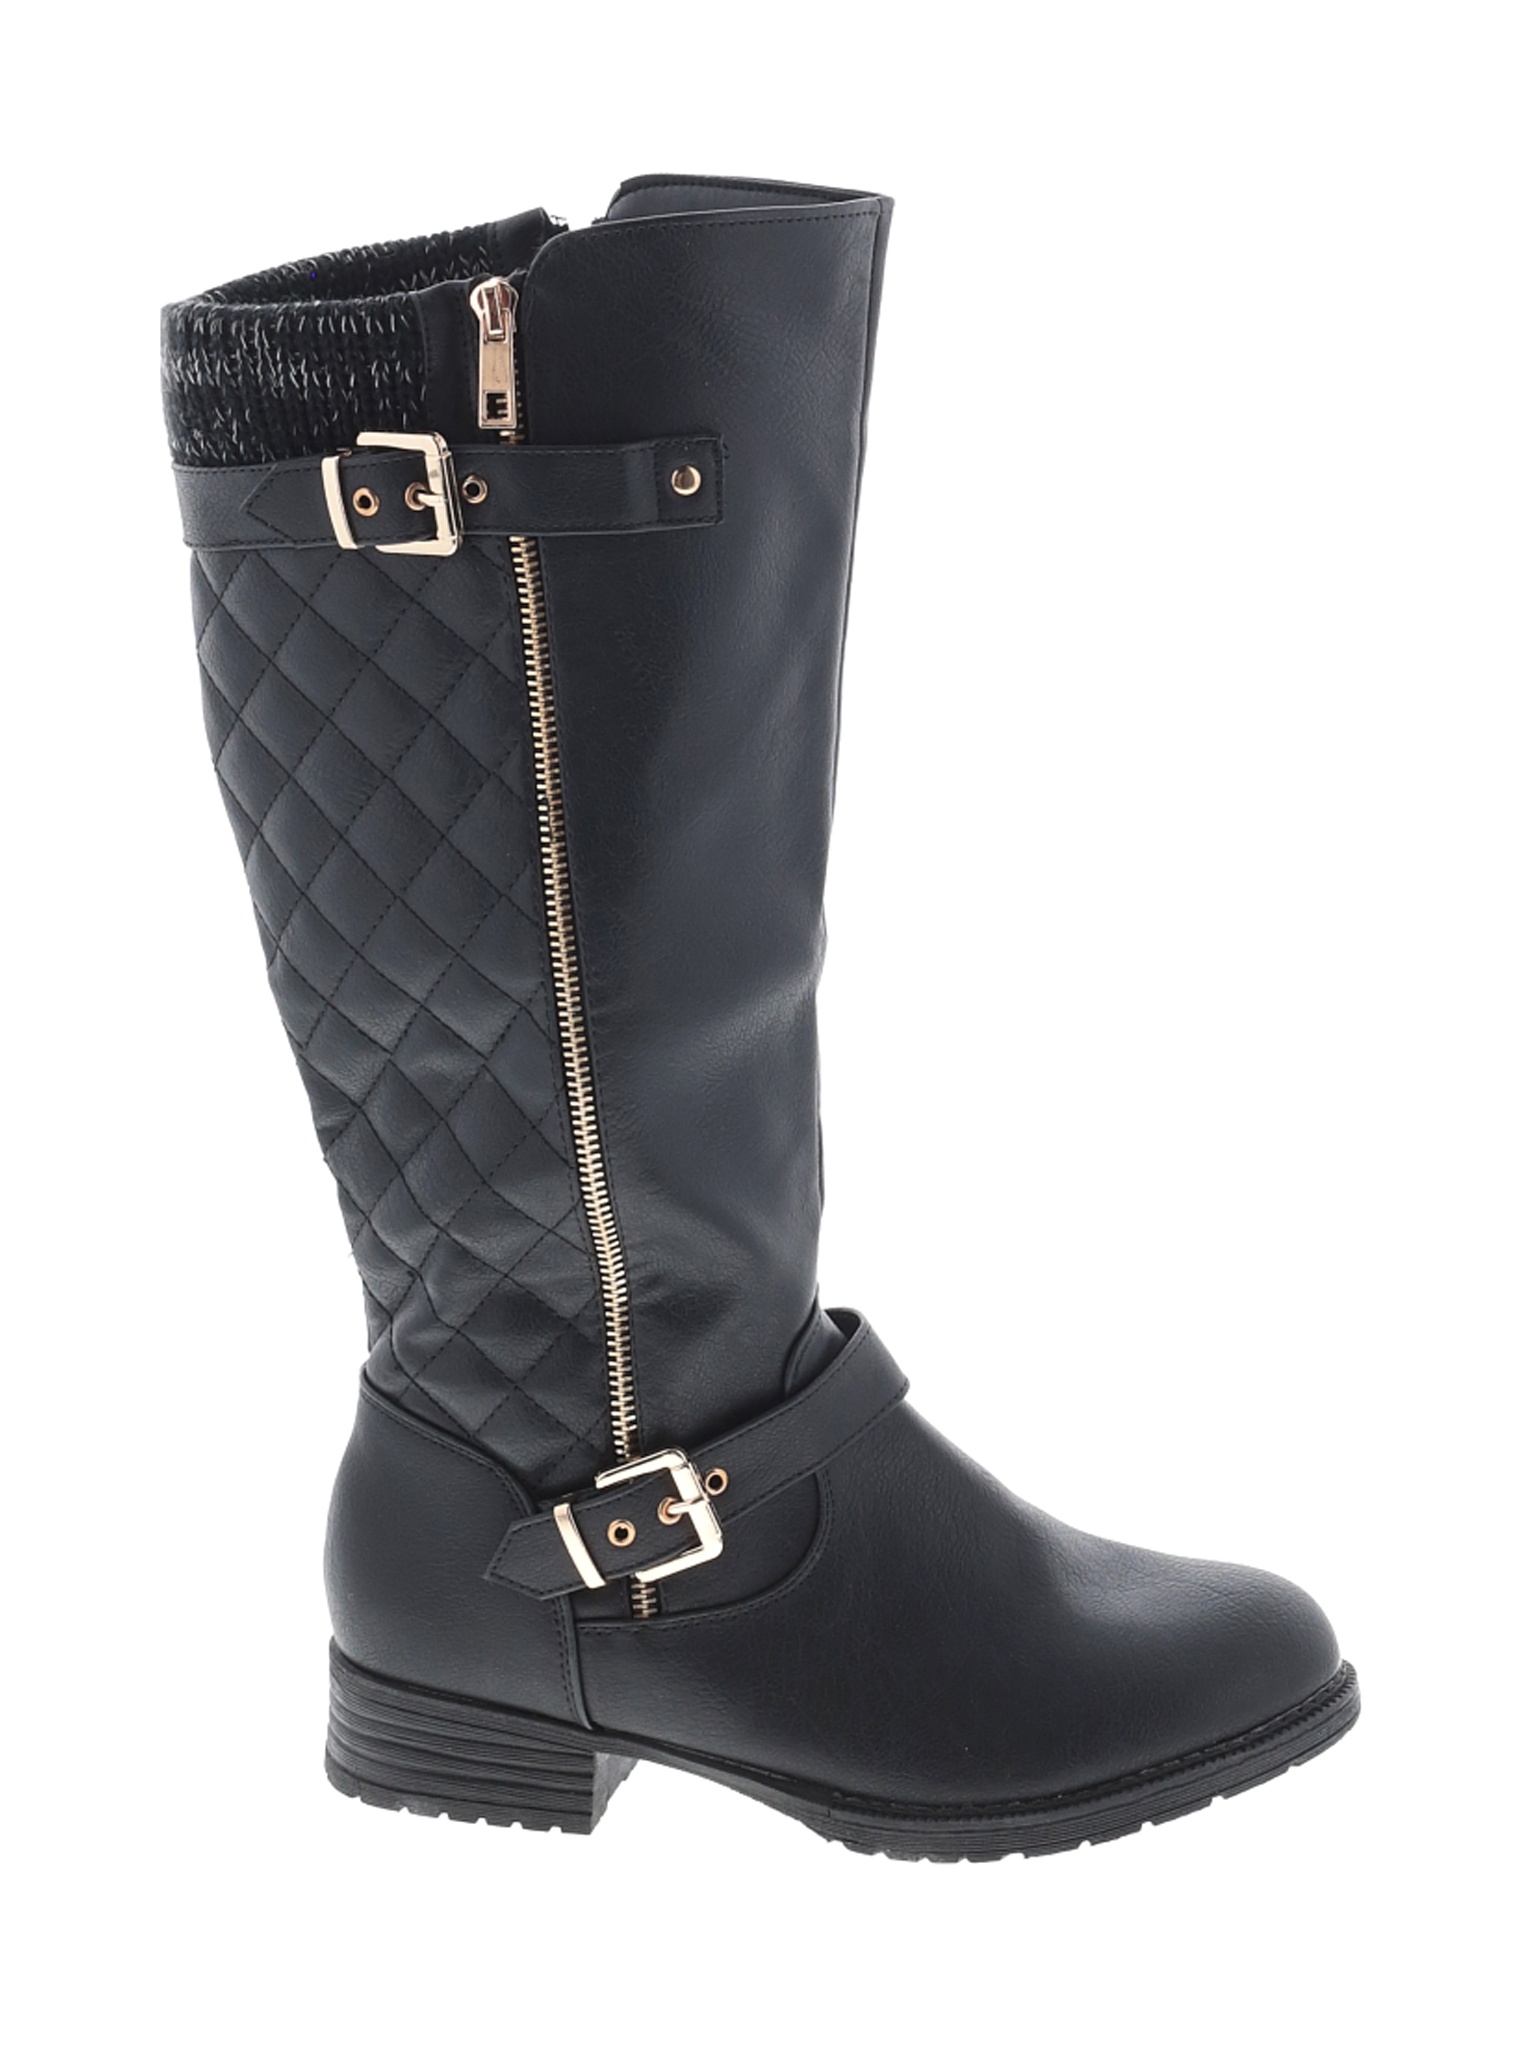 GLOBALWIN Women Black Boots US 10.5 | eBay